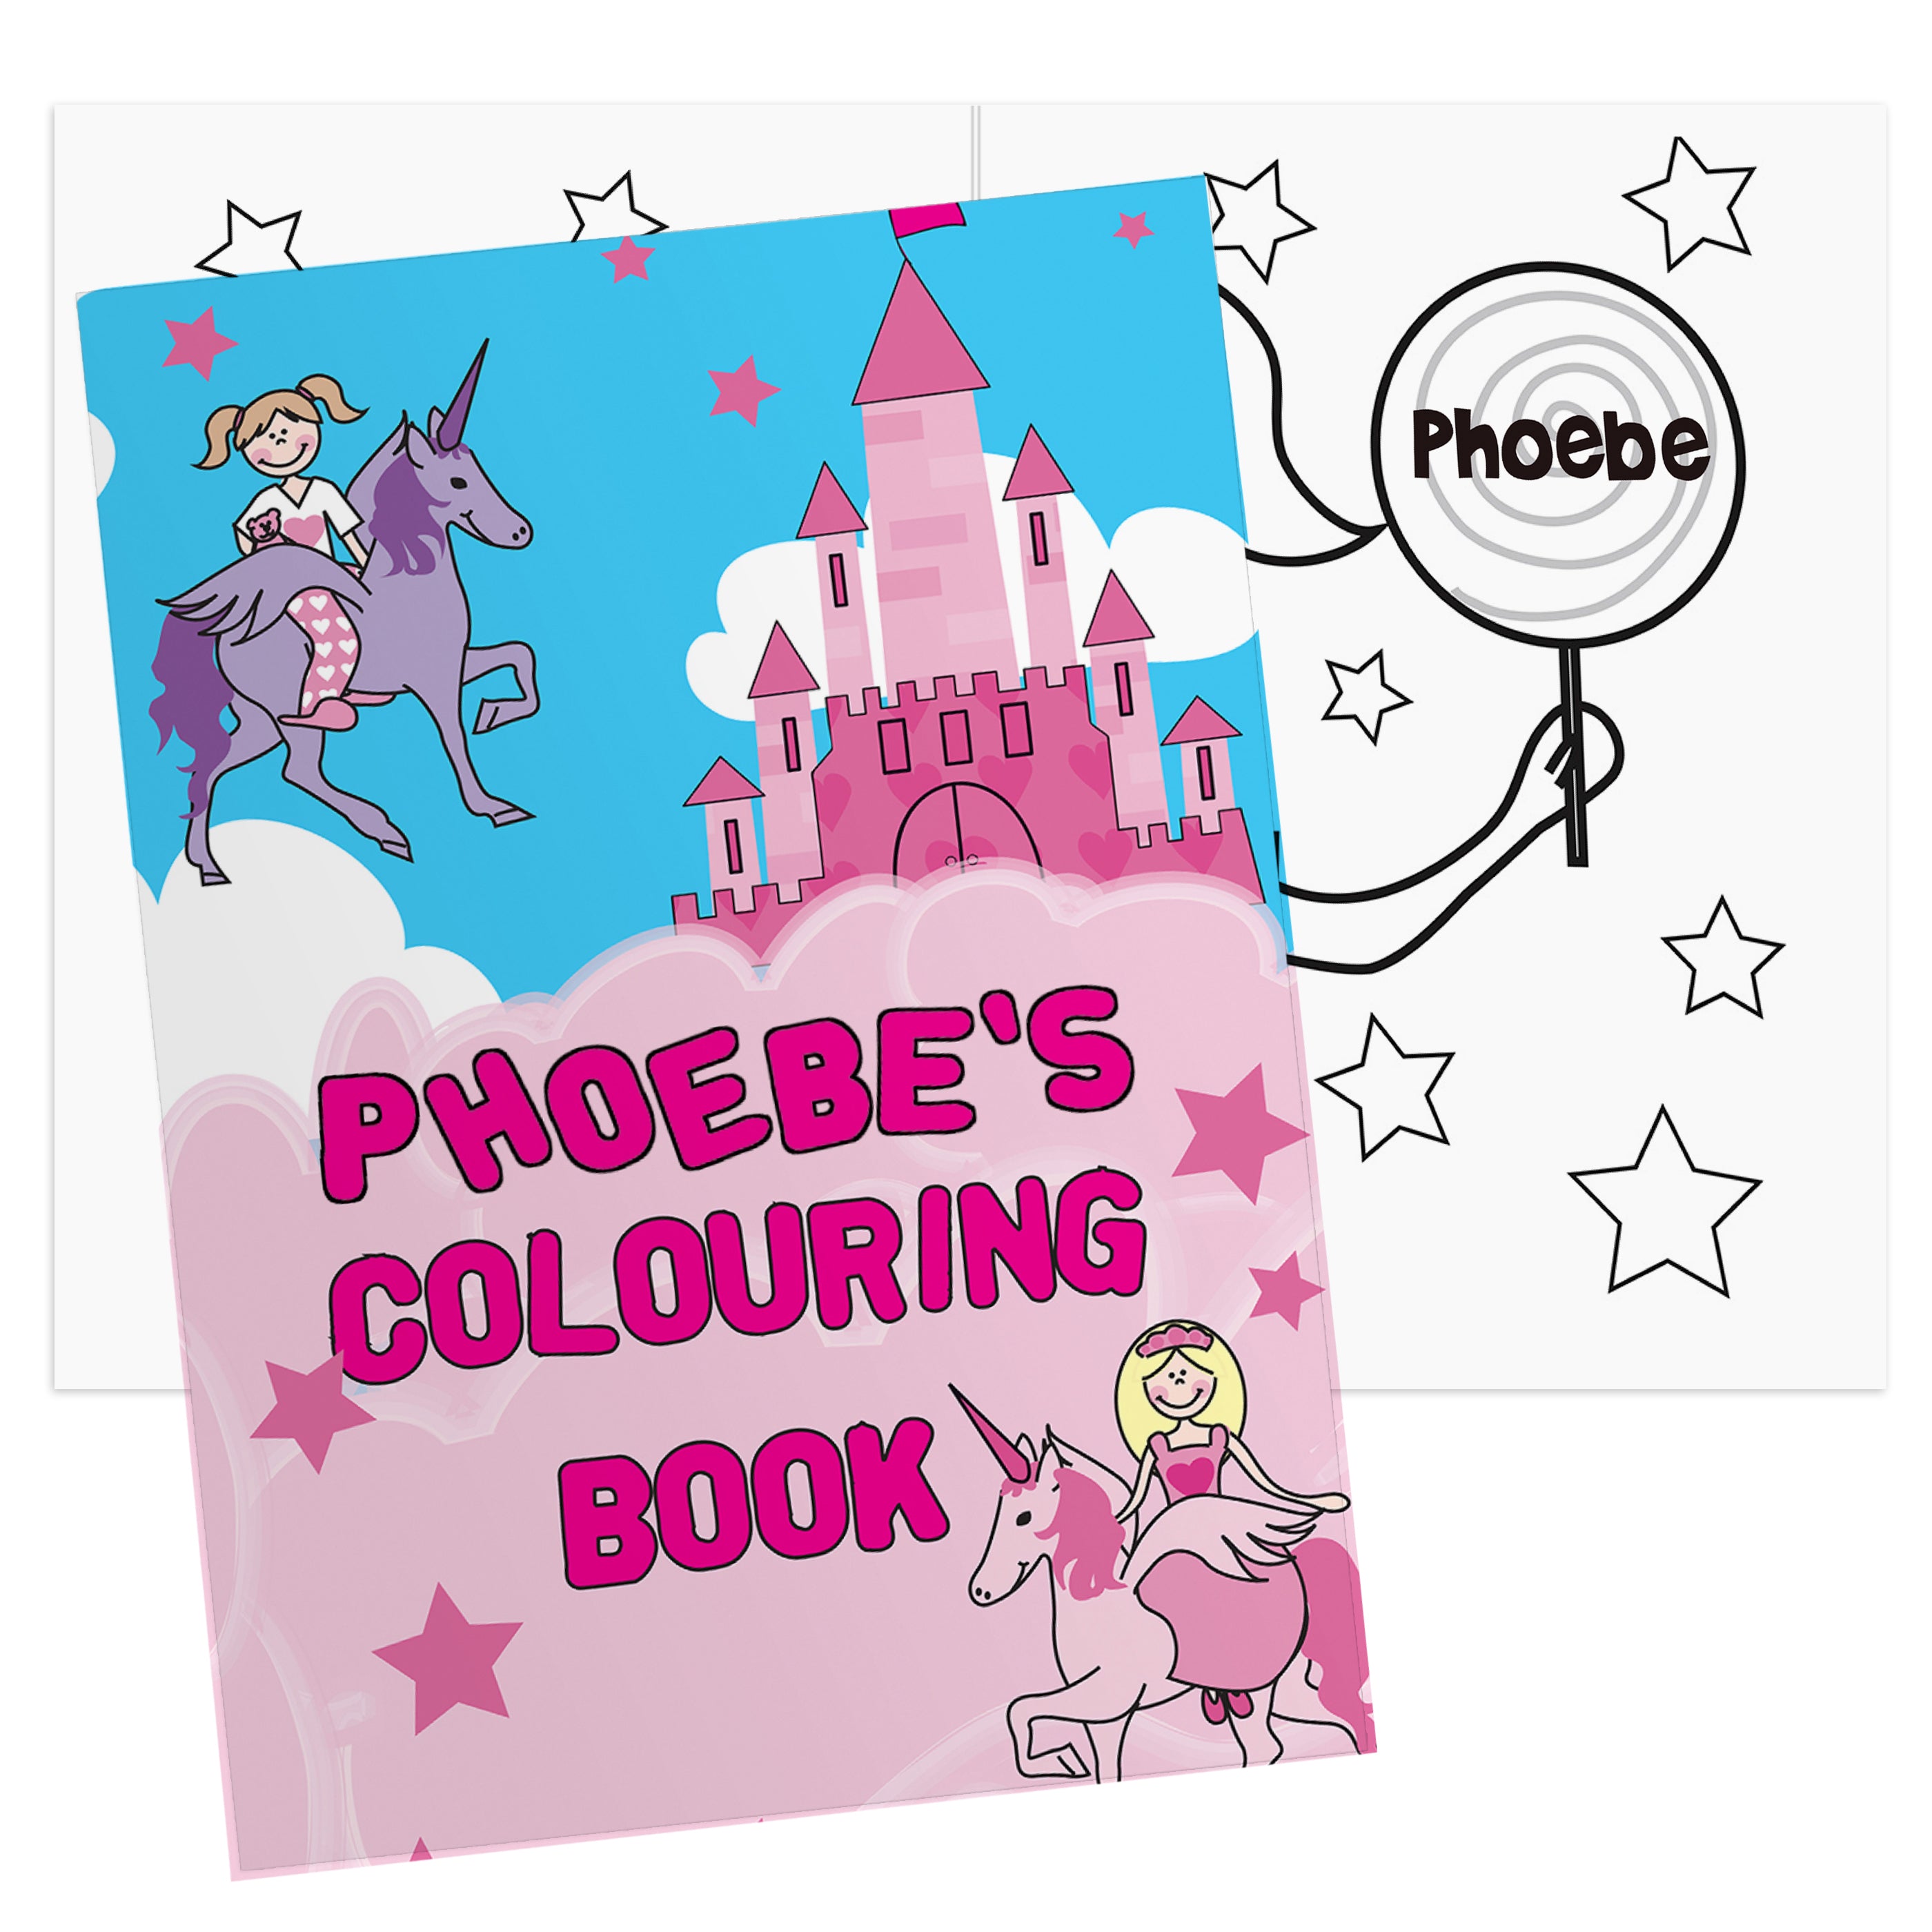 Personalised Princess & Unicorn Colouring Book